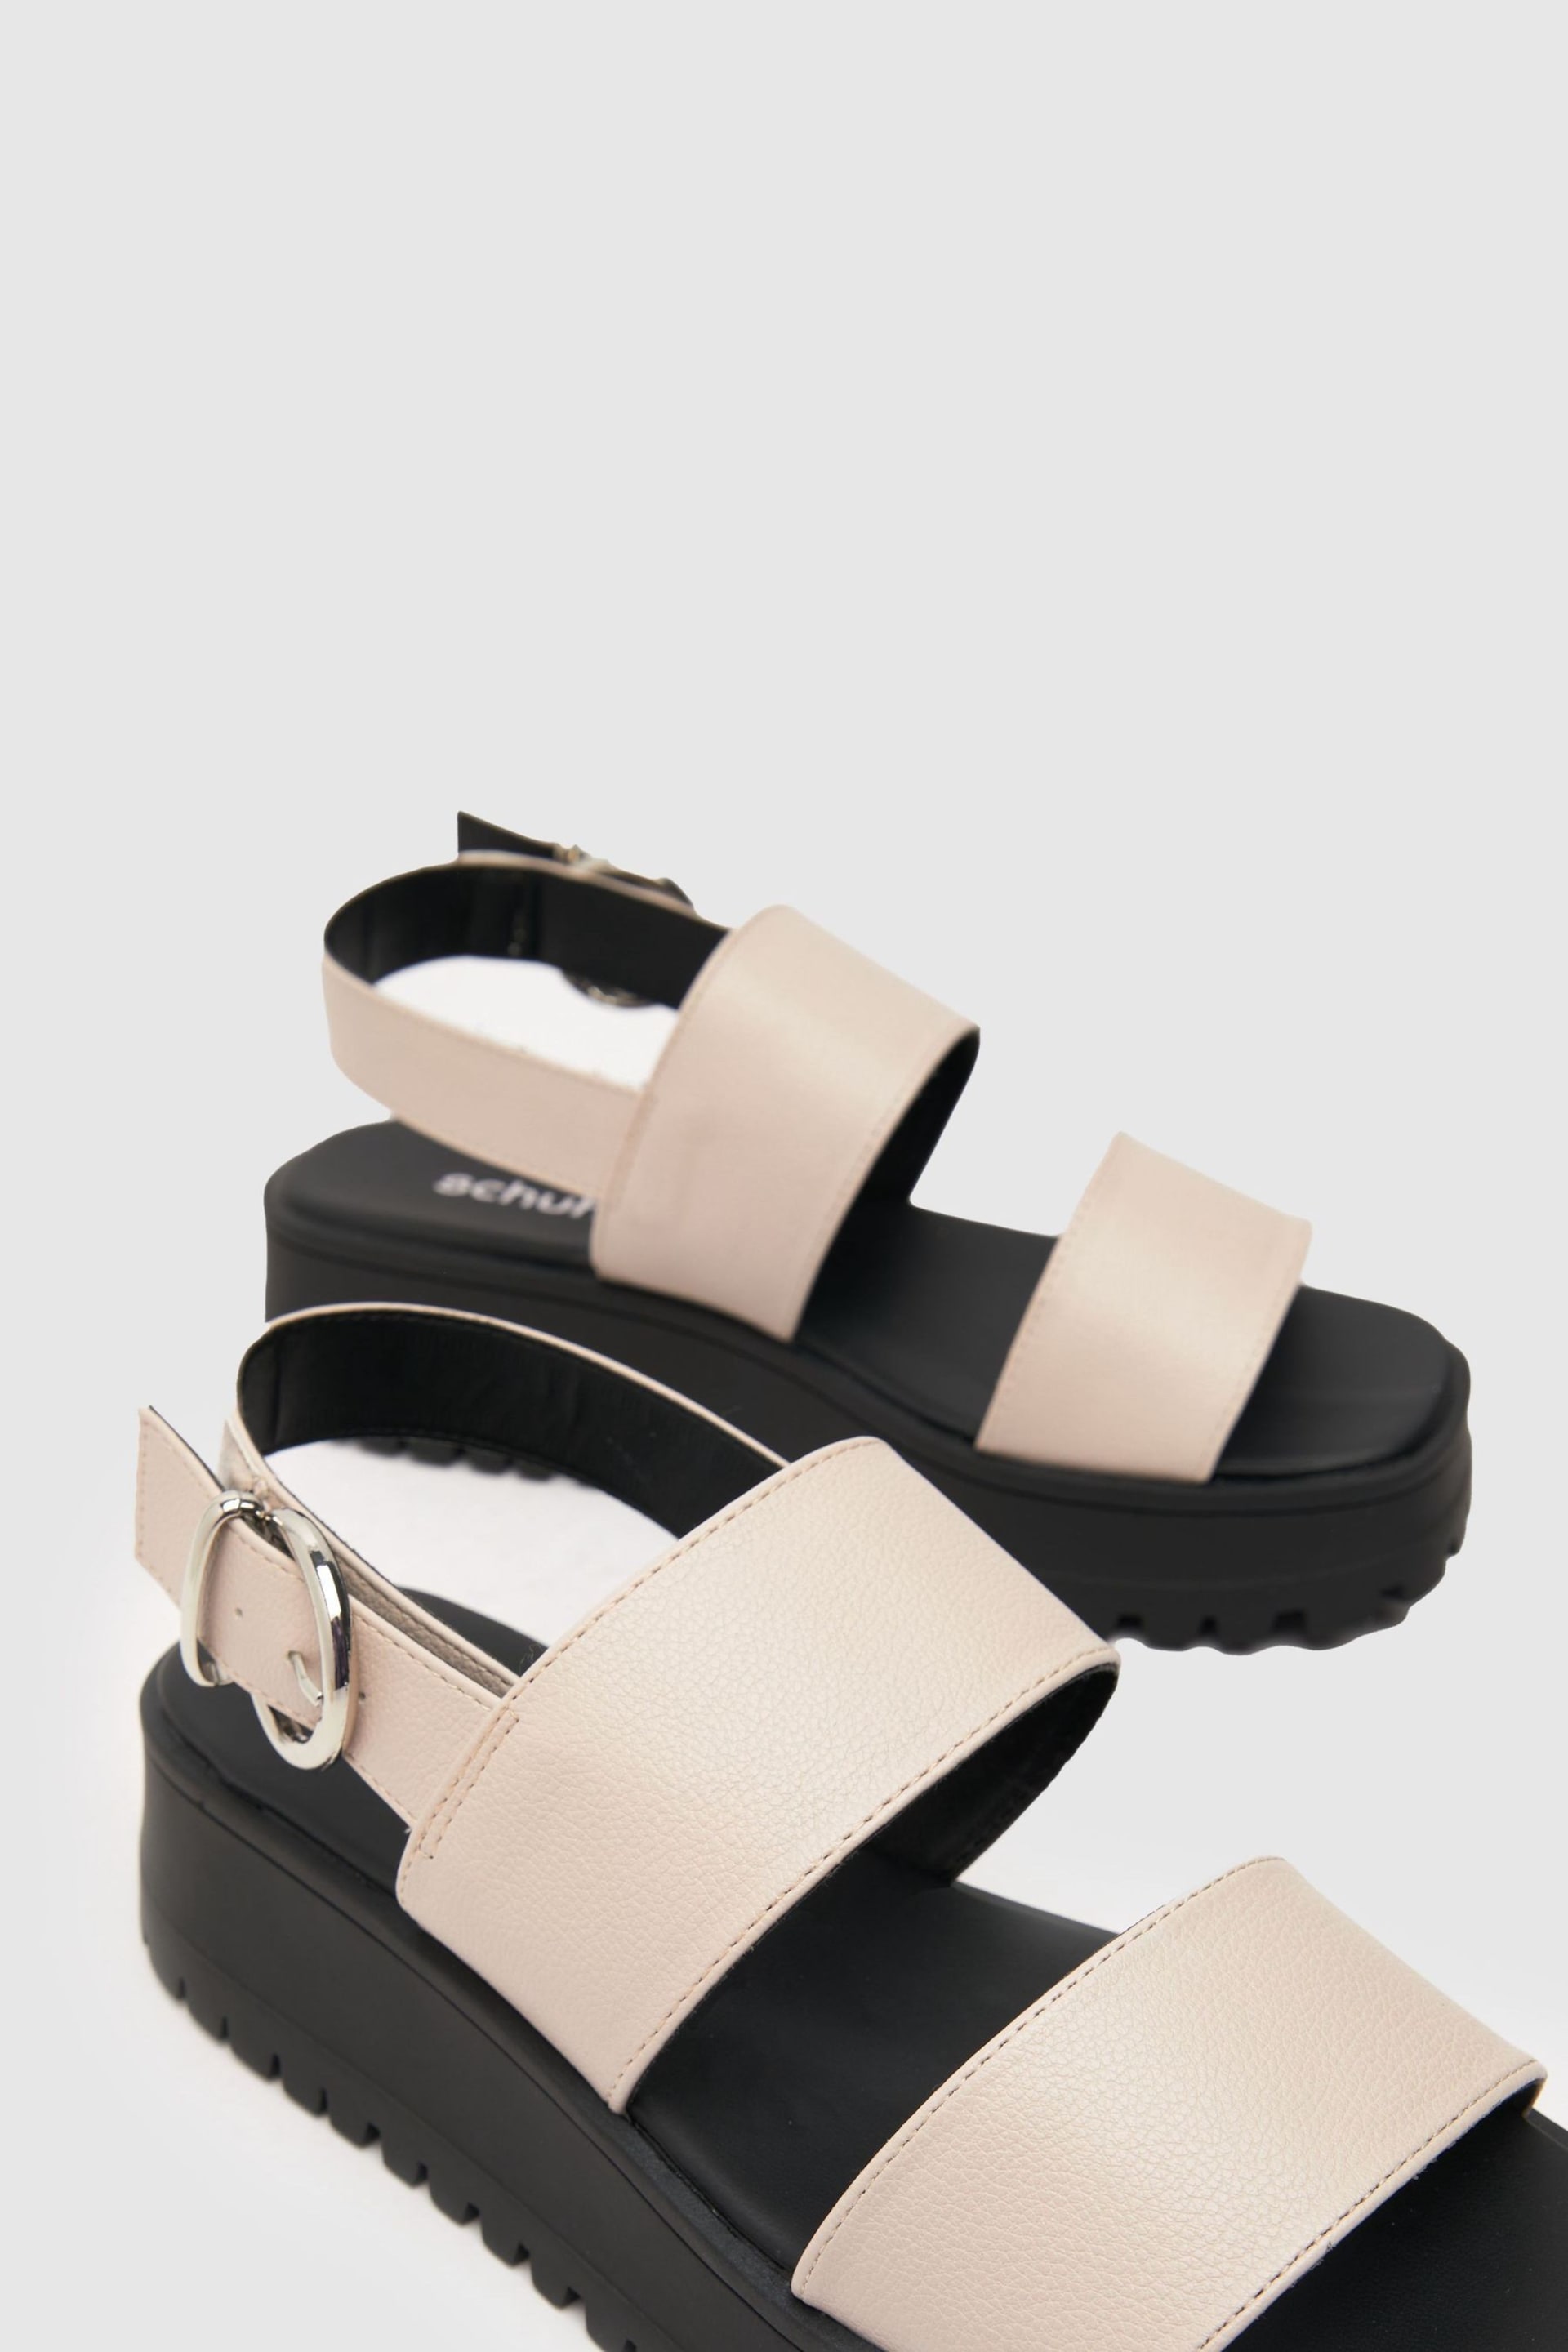 Schuh Tanya Chunky Flatform Sandals - Image 3 of 4